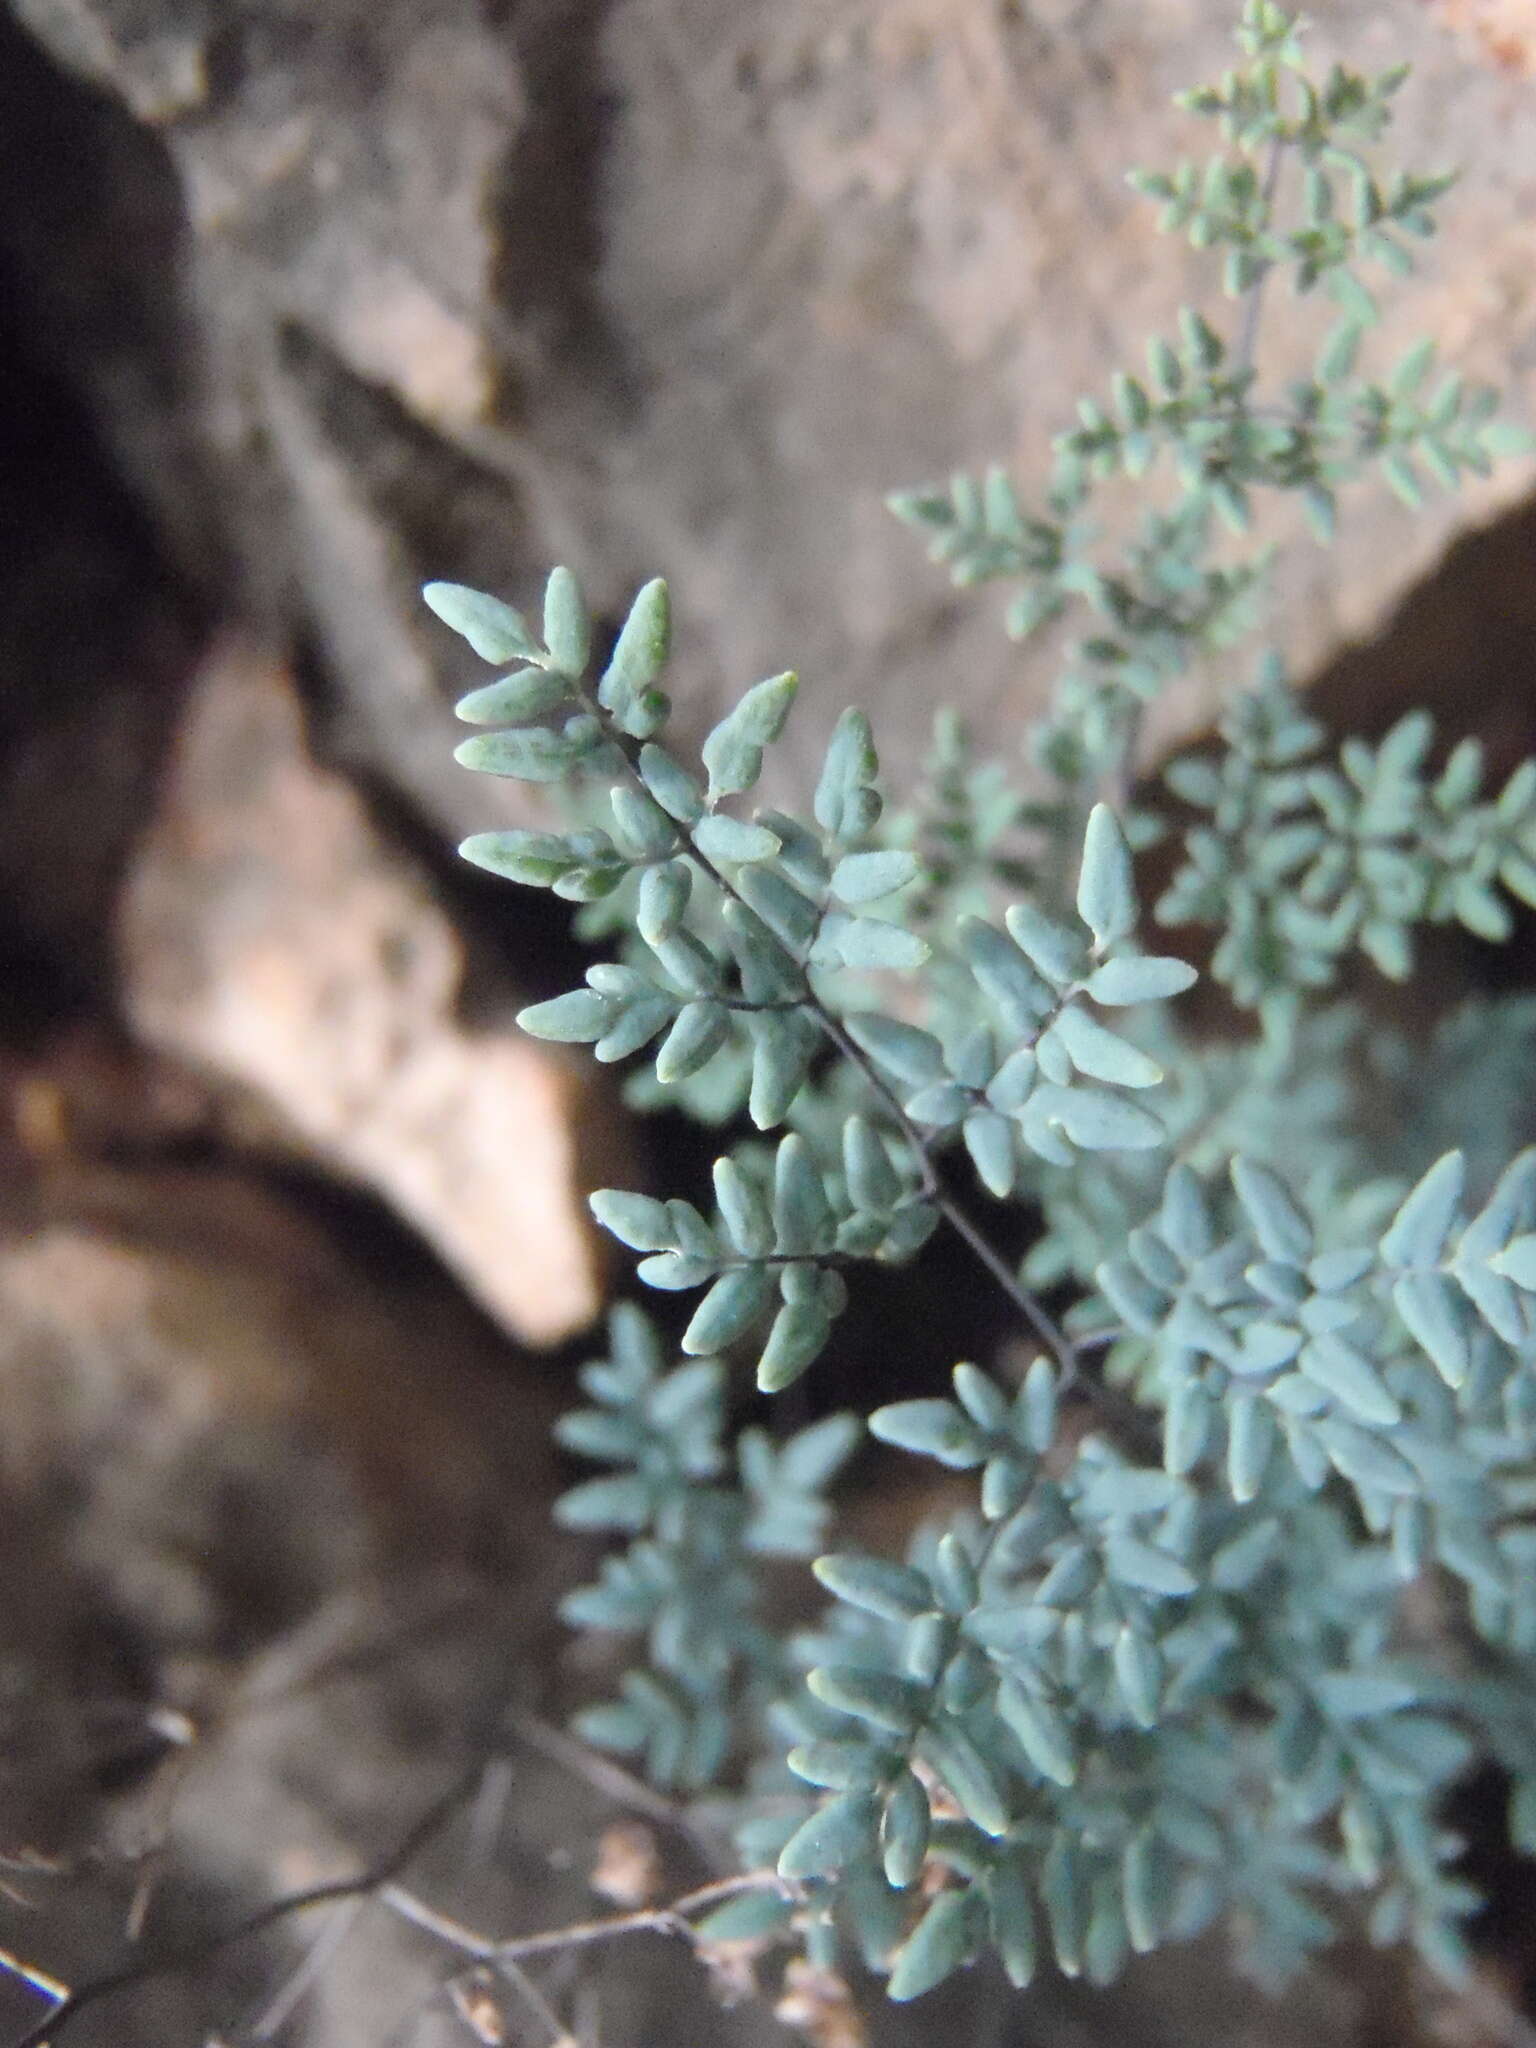 Image of southwestern false cloak fern